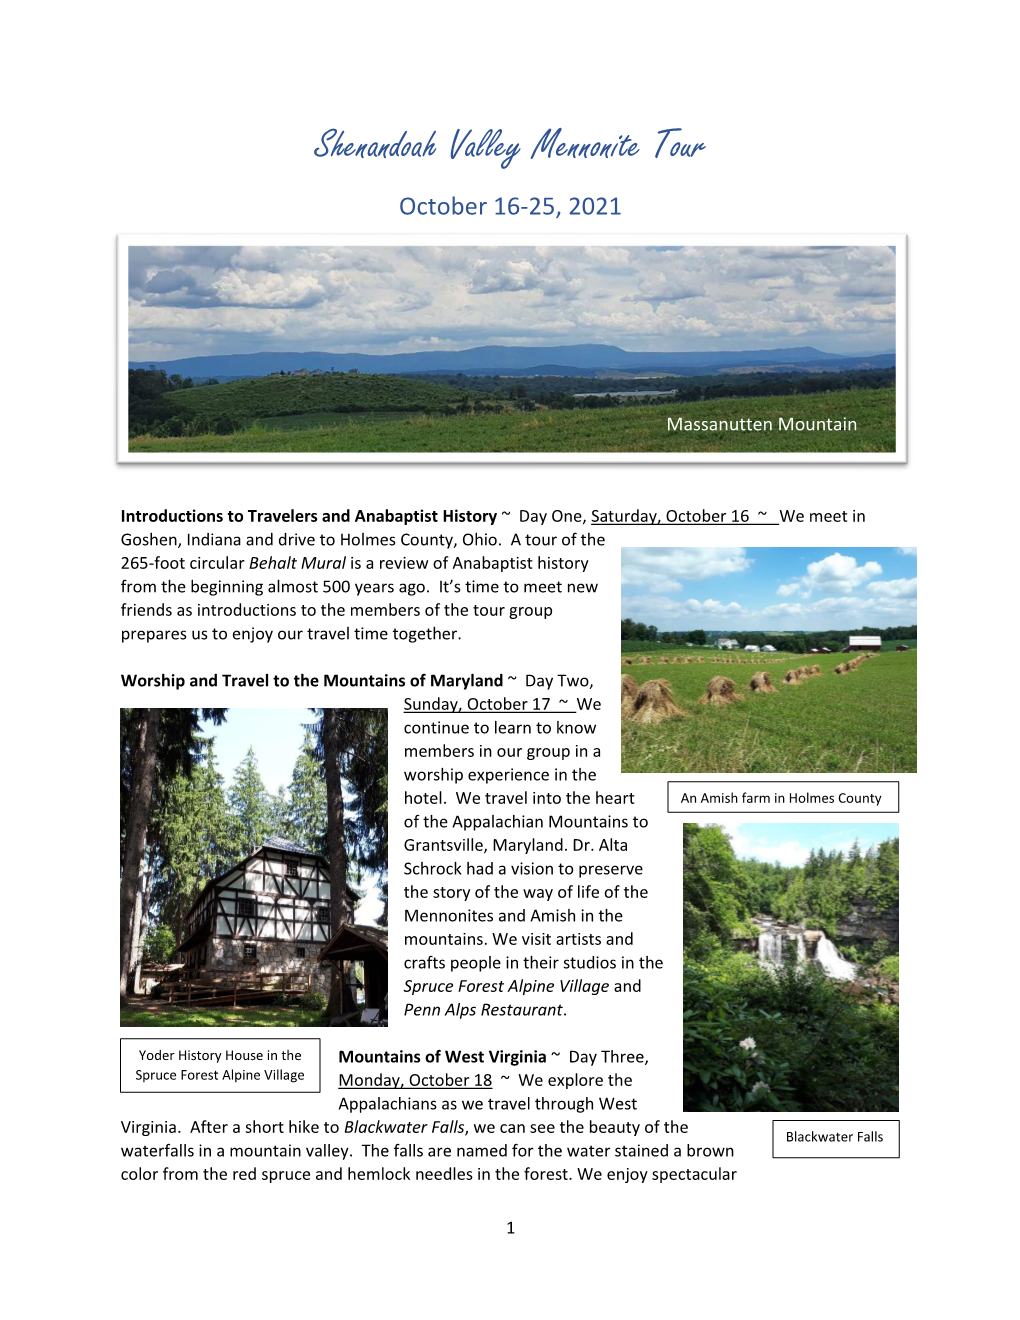 Shenandoah Valley Mennonite Tour October 16-25, 2021